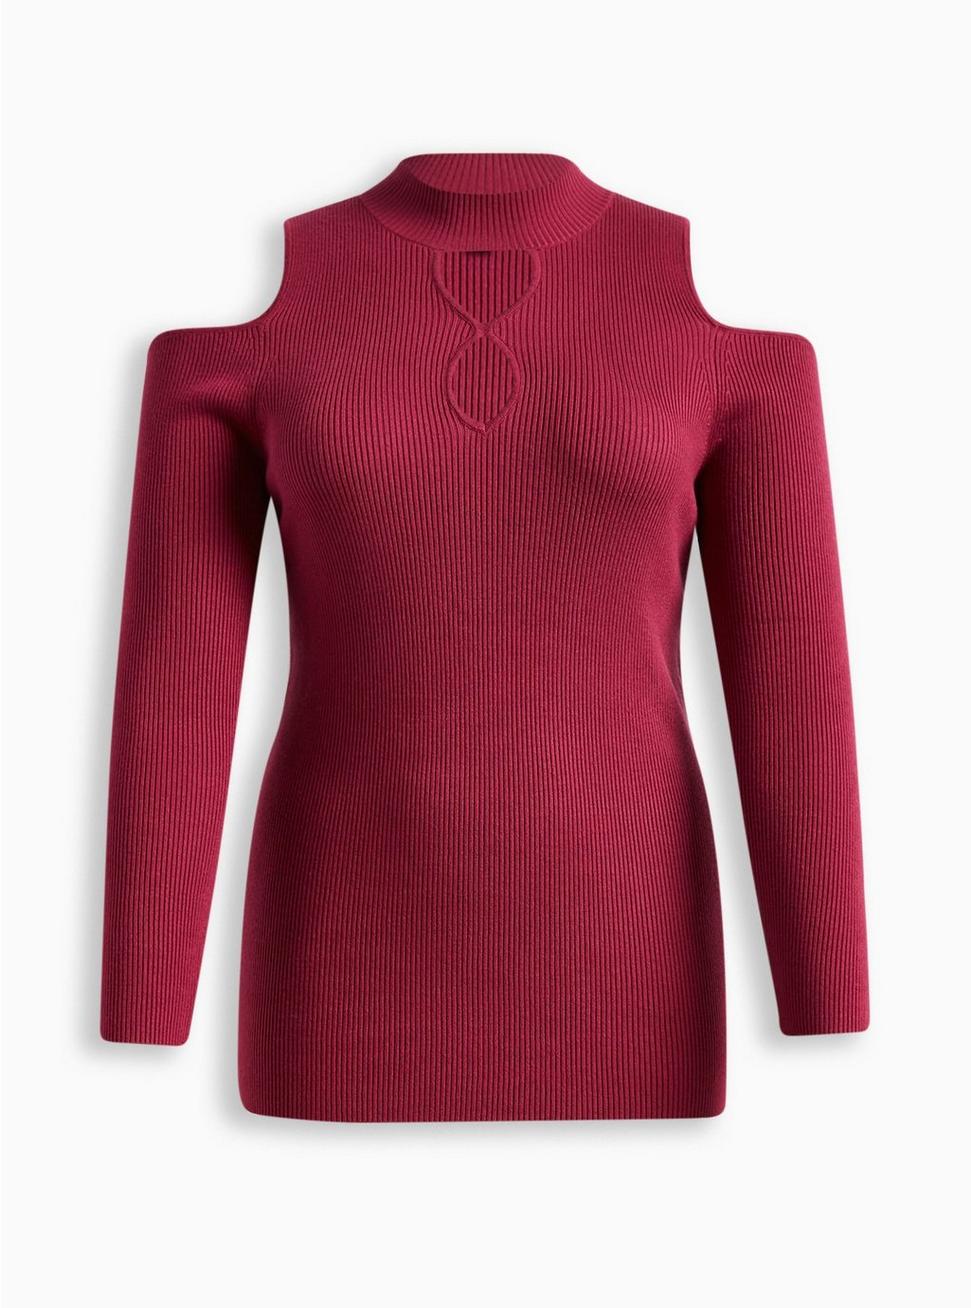 Pullover Mock Neck Cold Shoulder Fitted Sweater, RED, hi-res